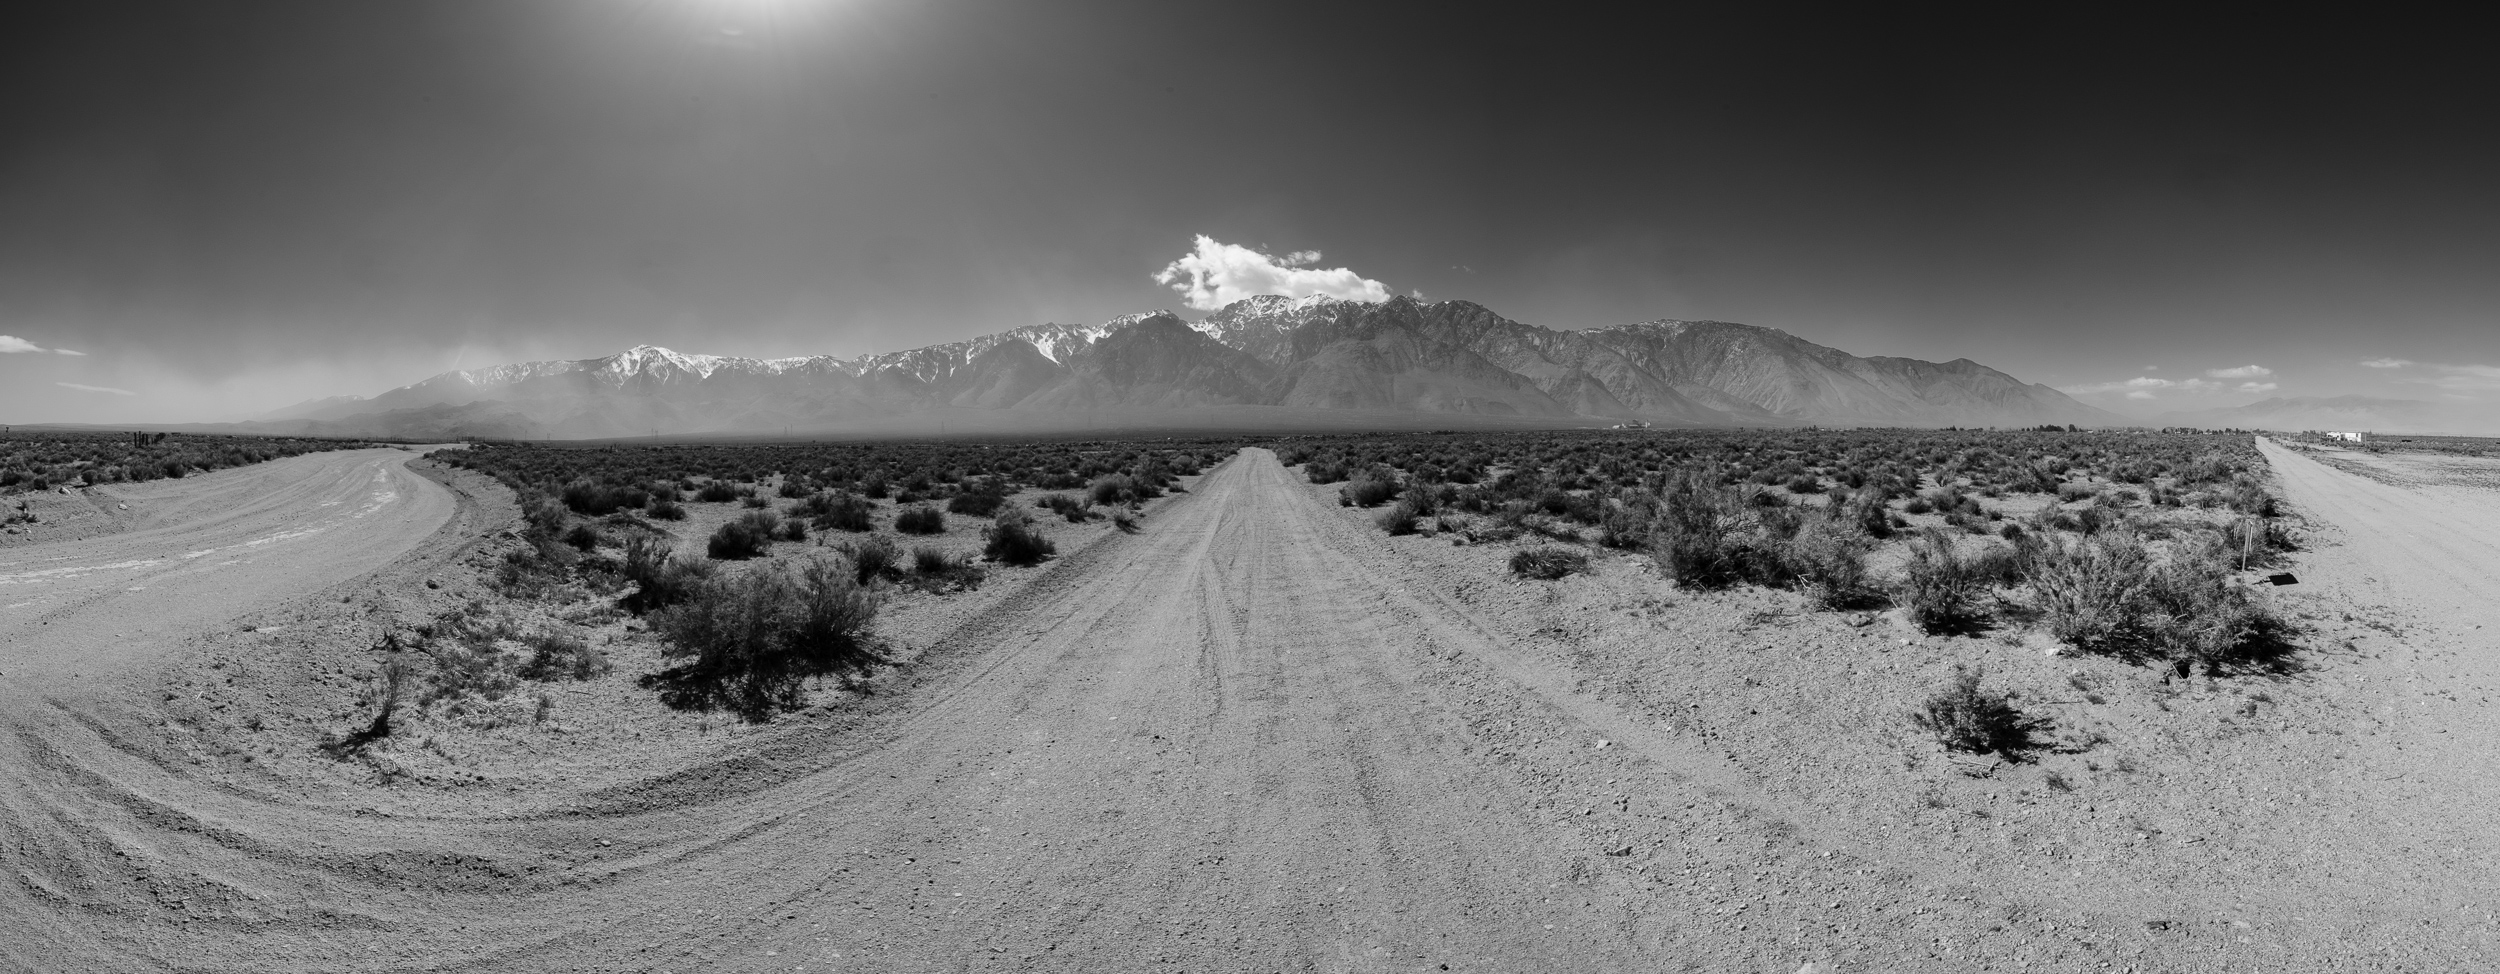  Random dirt roads leading to the Eastern Sierra, somewhere south of Lone Pine, California. 